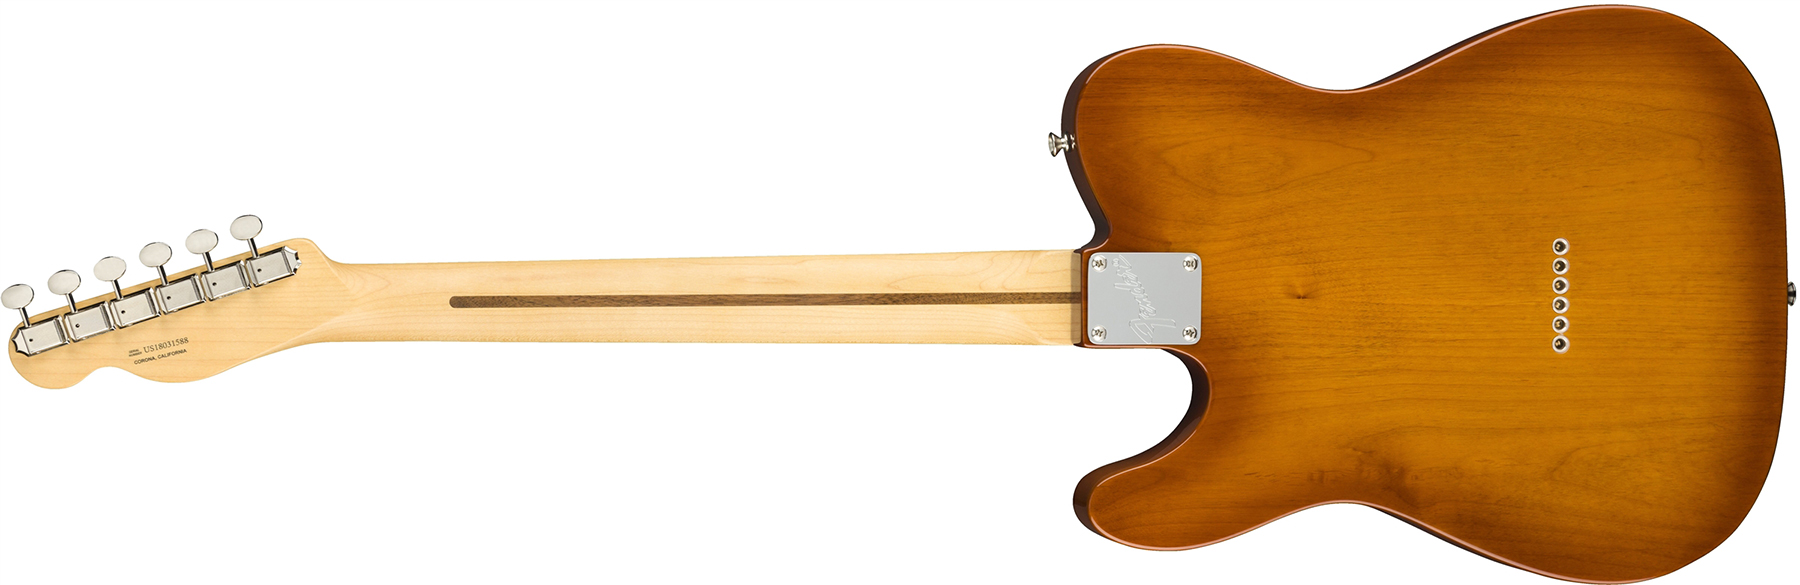 Fender Tele American Performer Usa Rw - Honey Burst - Guitarra eléctrica con forma de tel - Variation 1